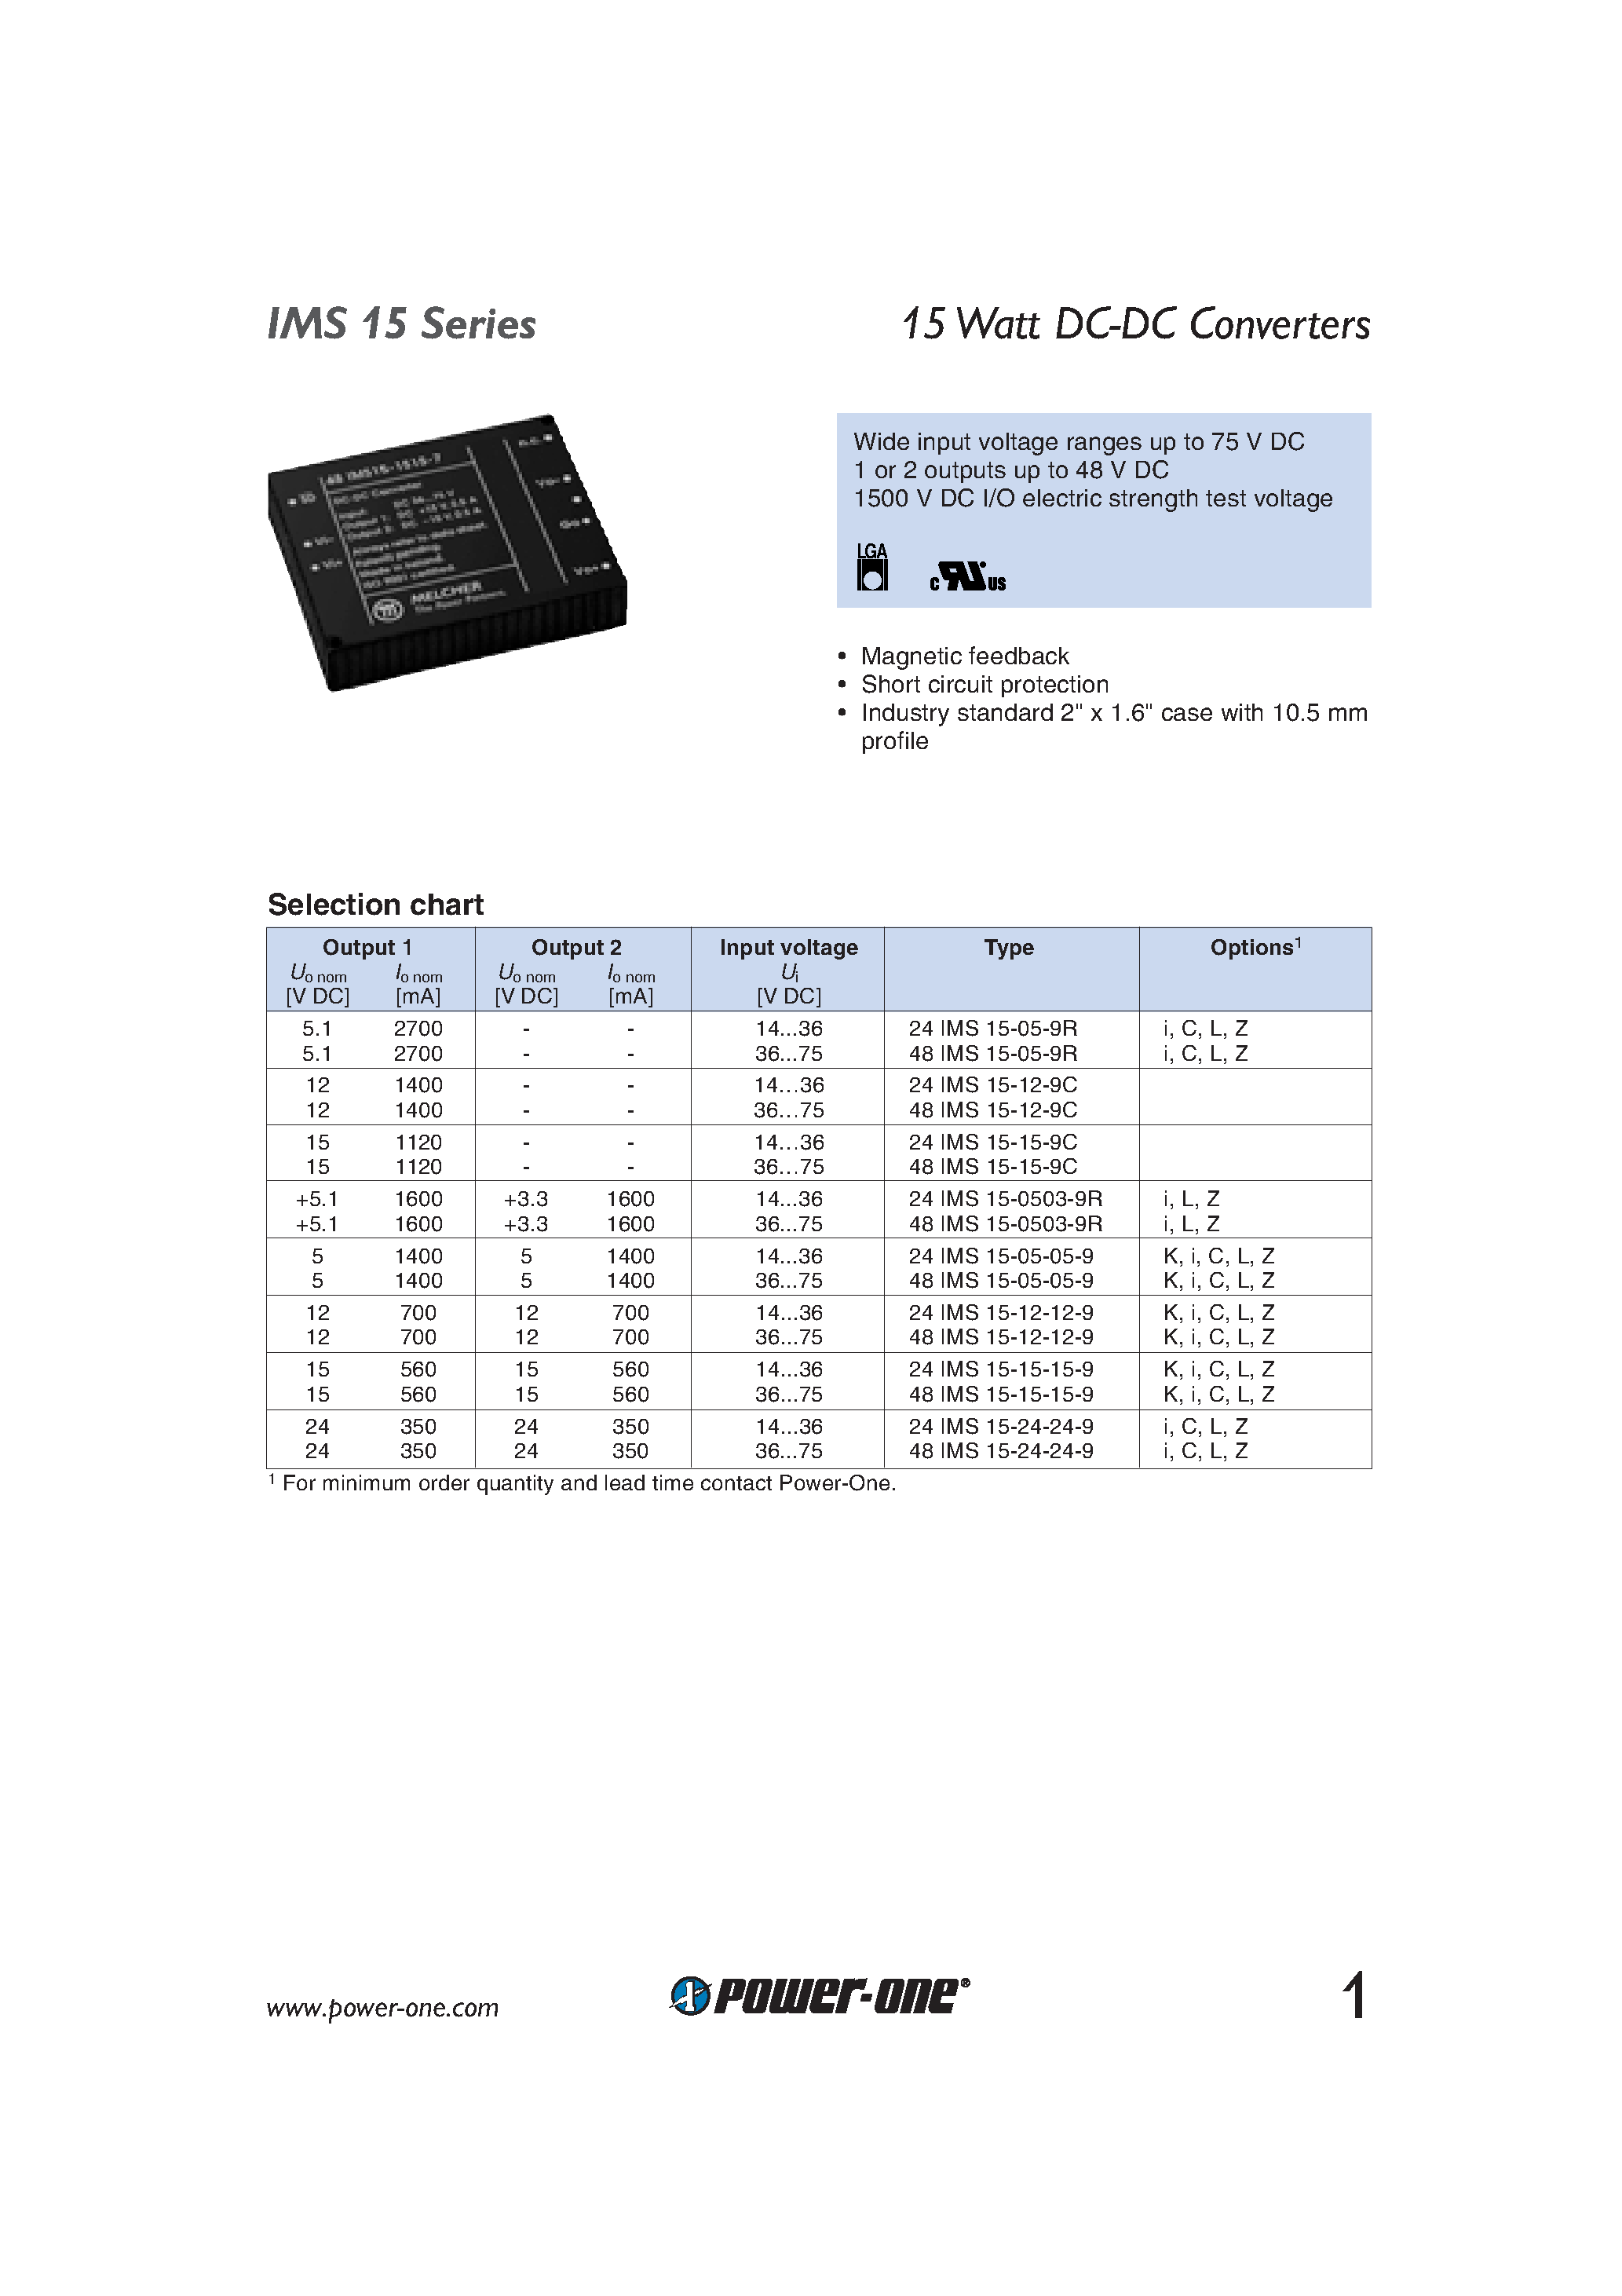 Datasheet 48IMS15-05-05-9 - 15 Watt DC-DC Converters page 1